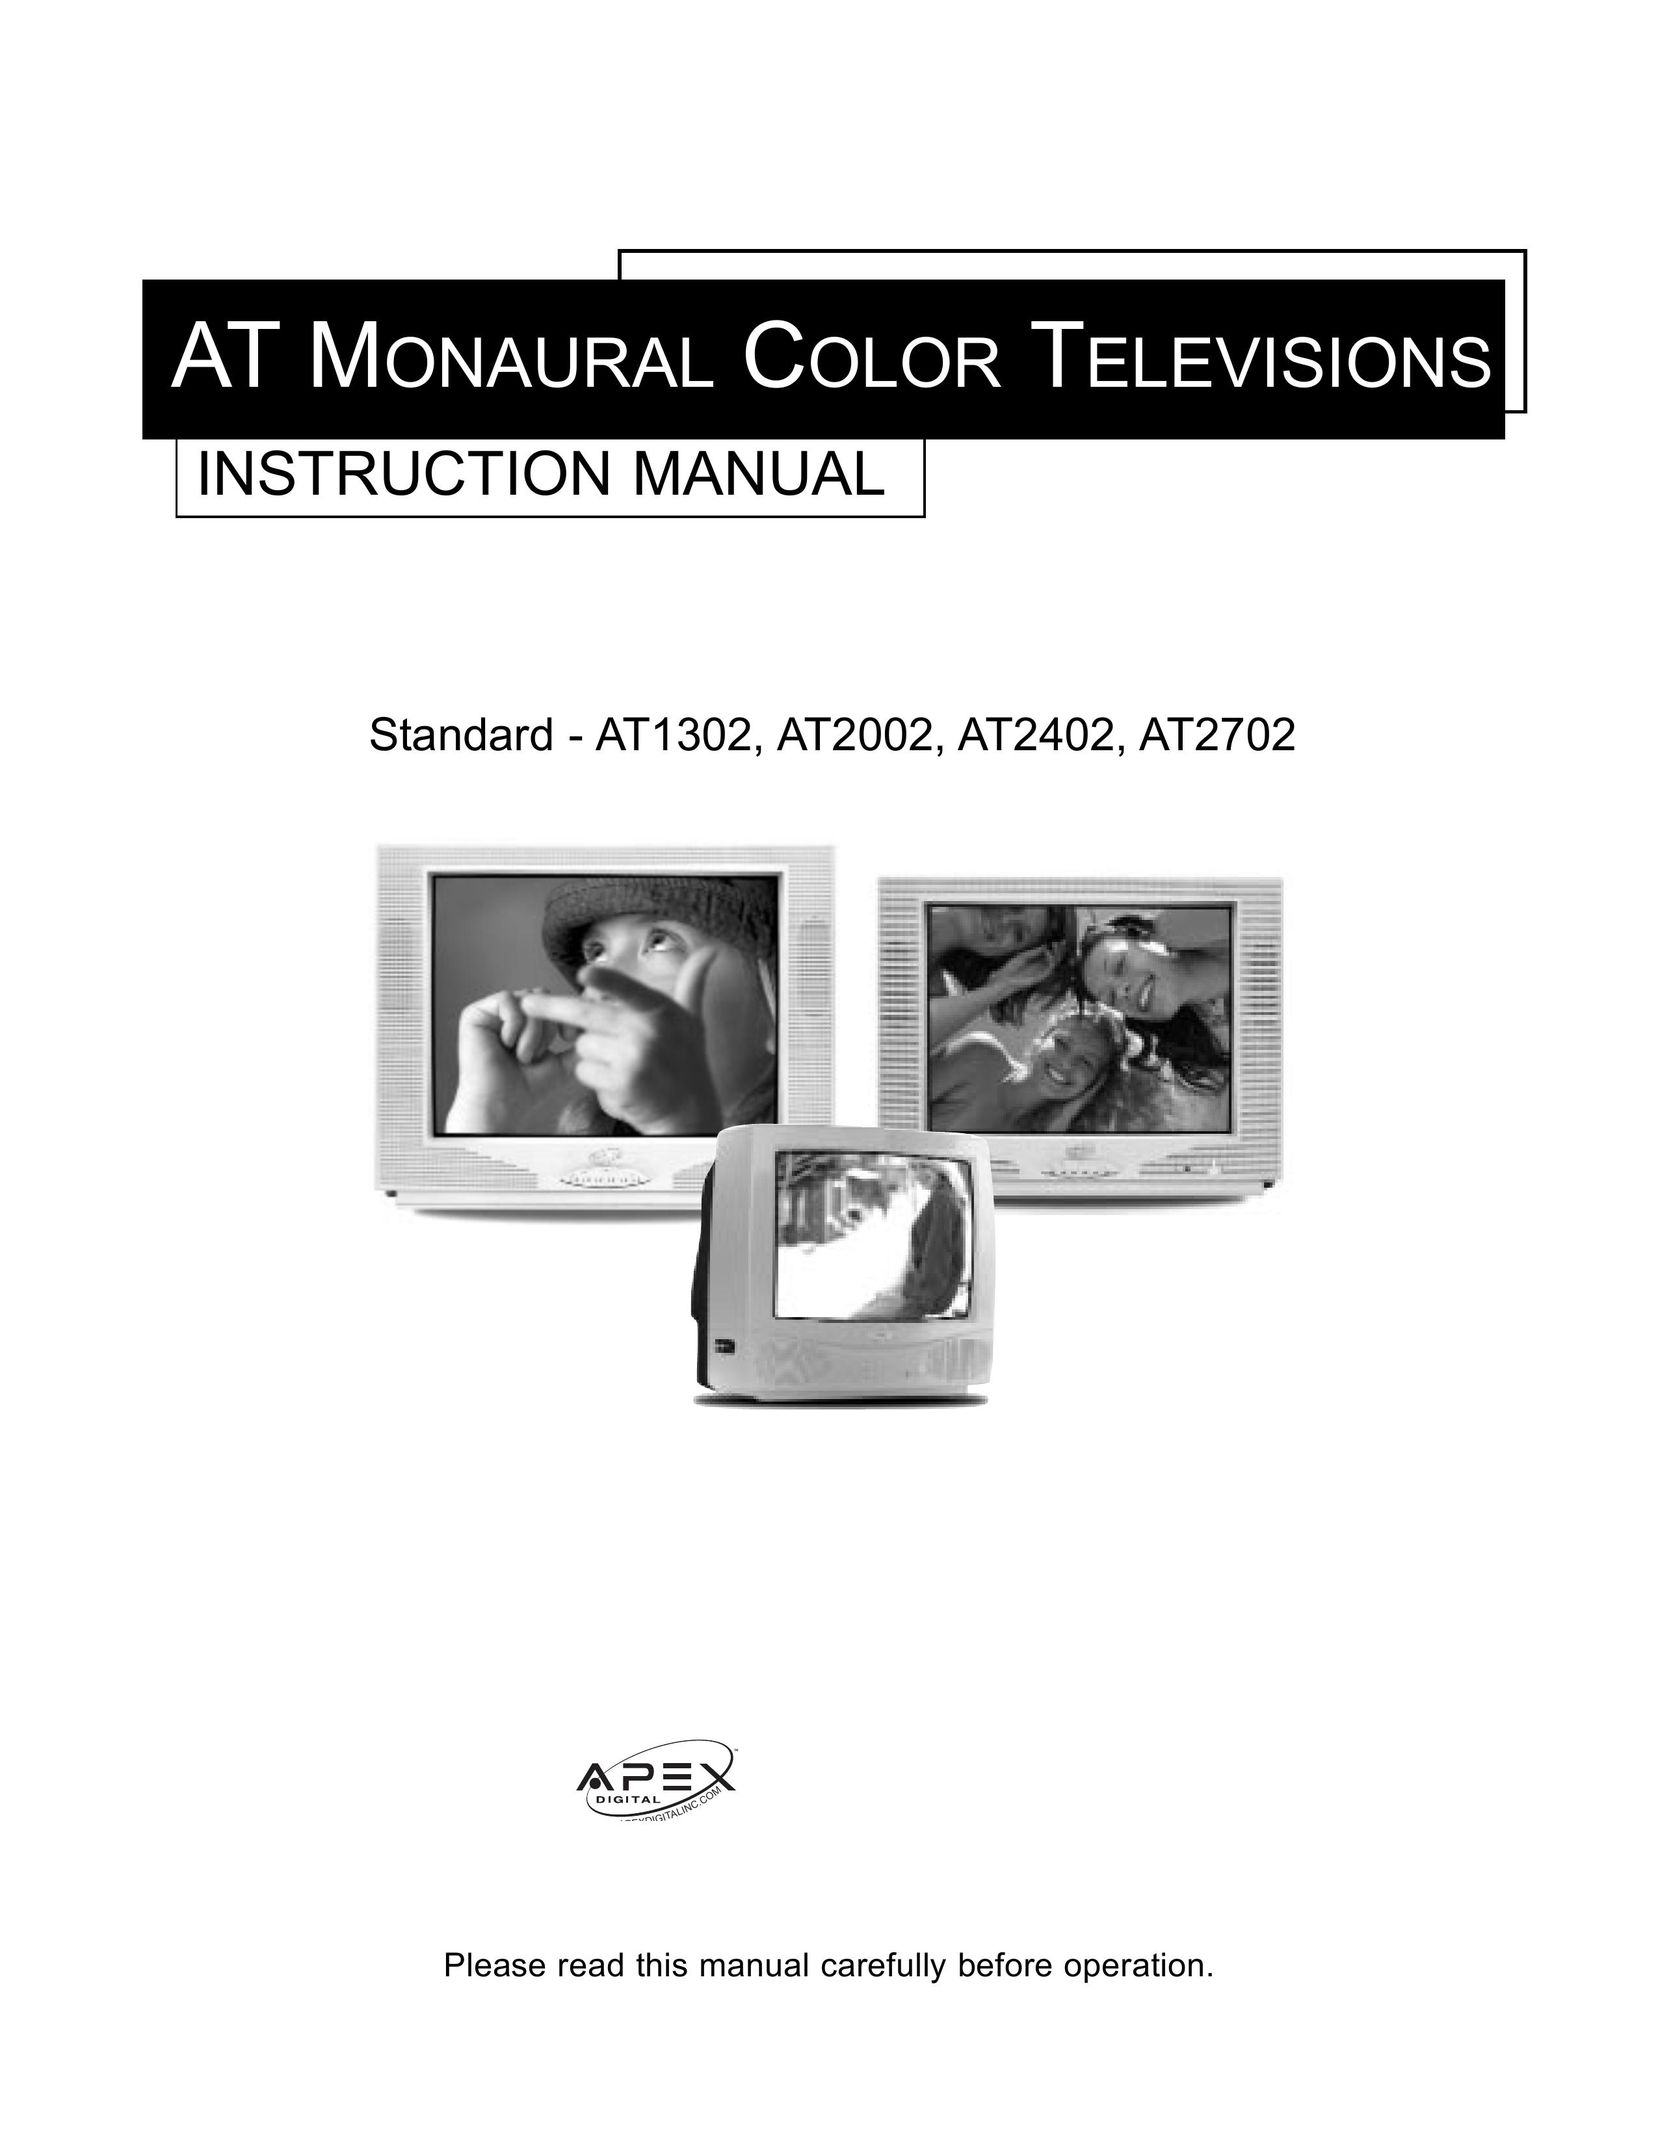 Apex Digital AT2402 Flat Panel Television User Manual